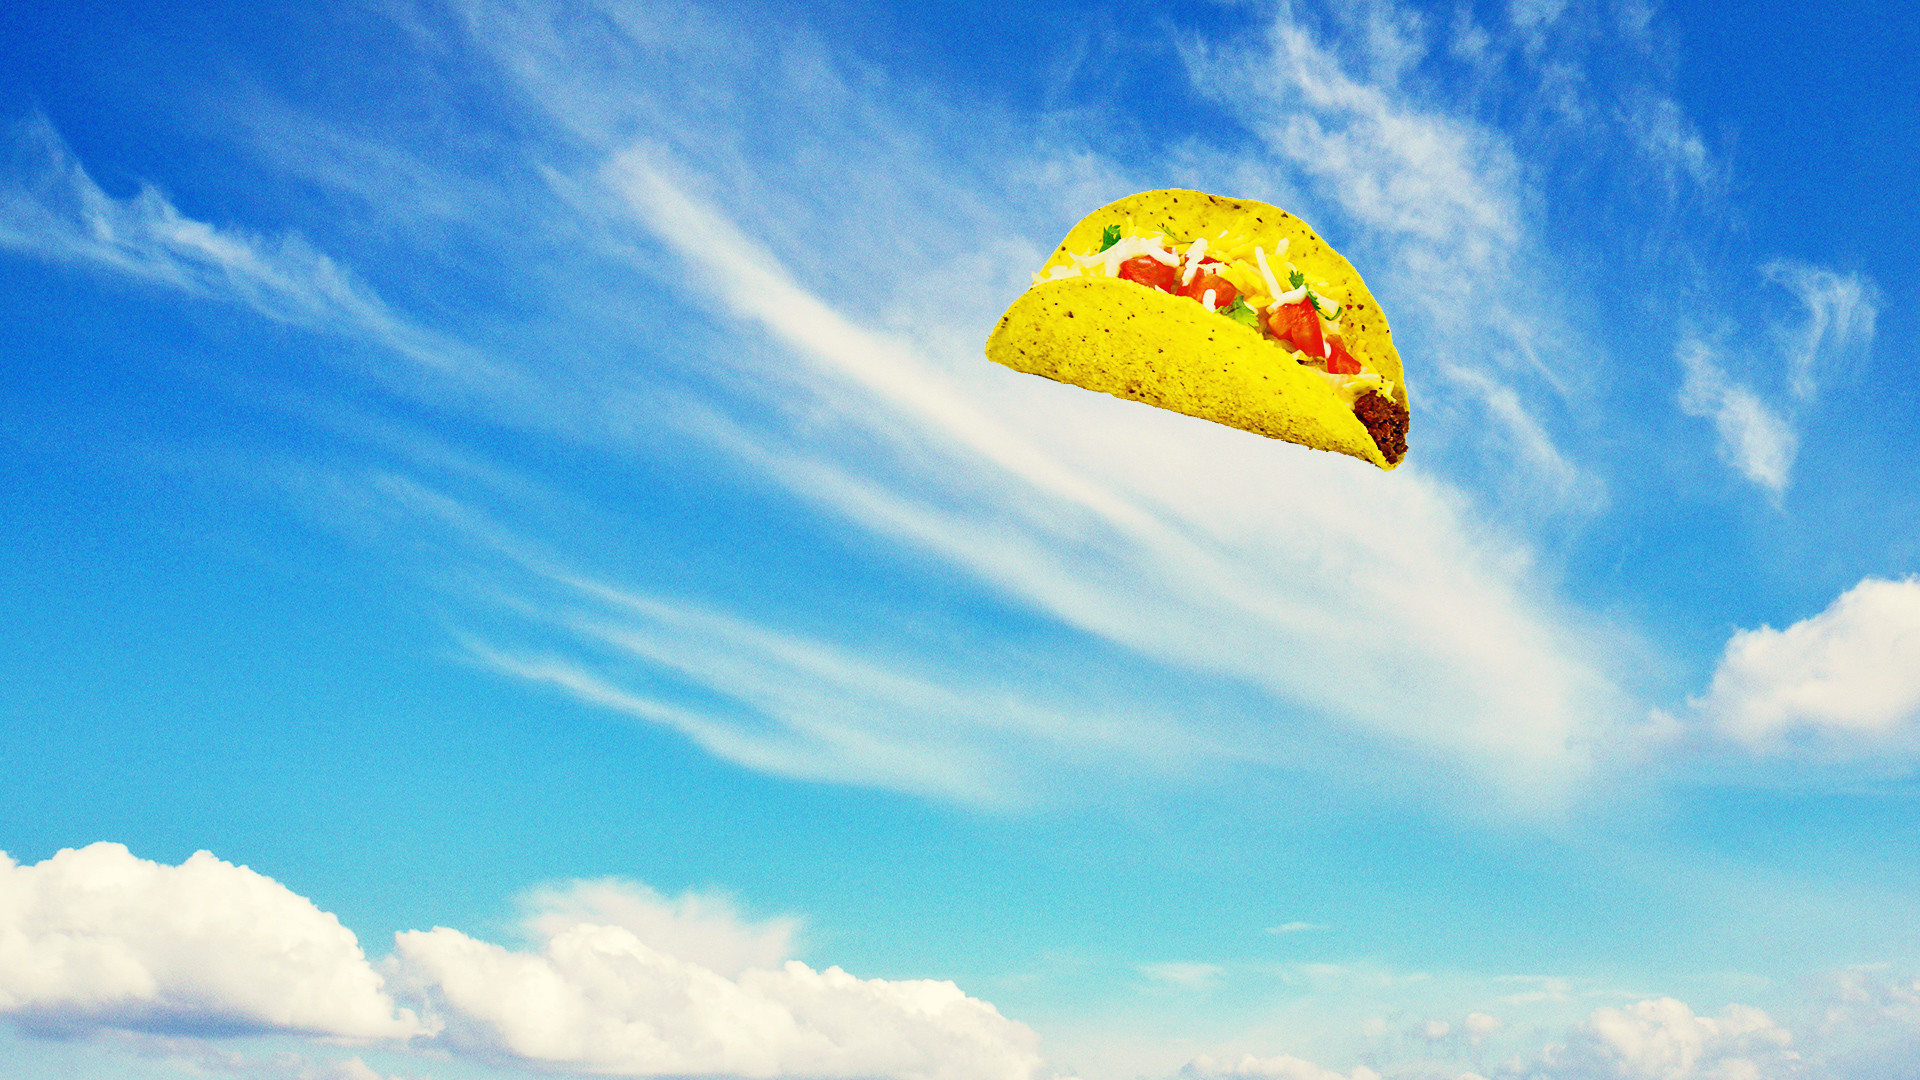 taco bell wallpaper,sky,cloud,daytime,parachute,yellow